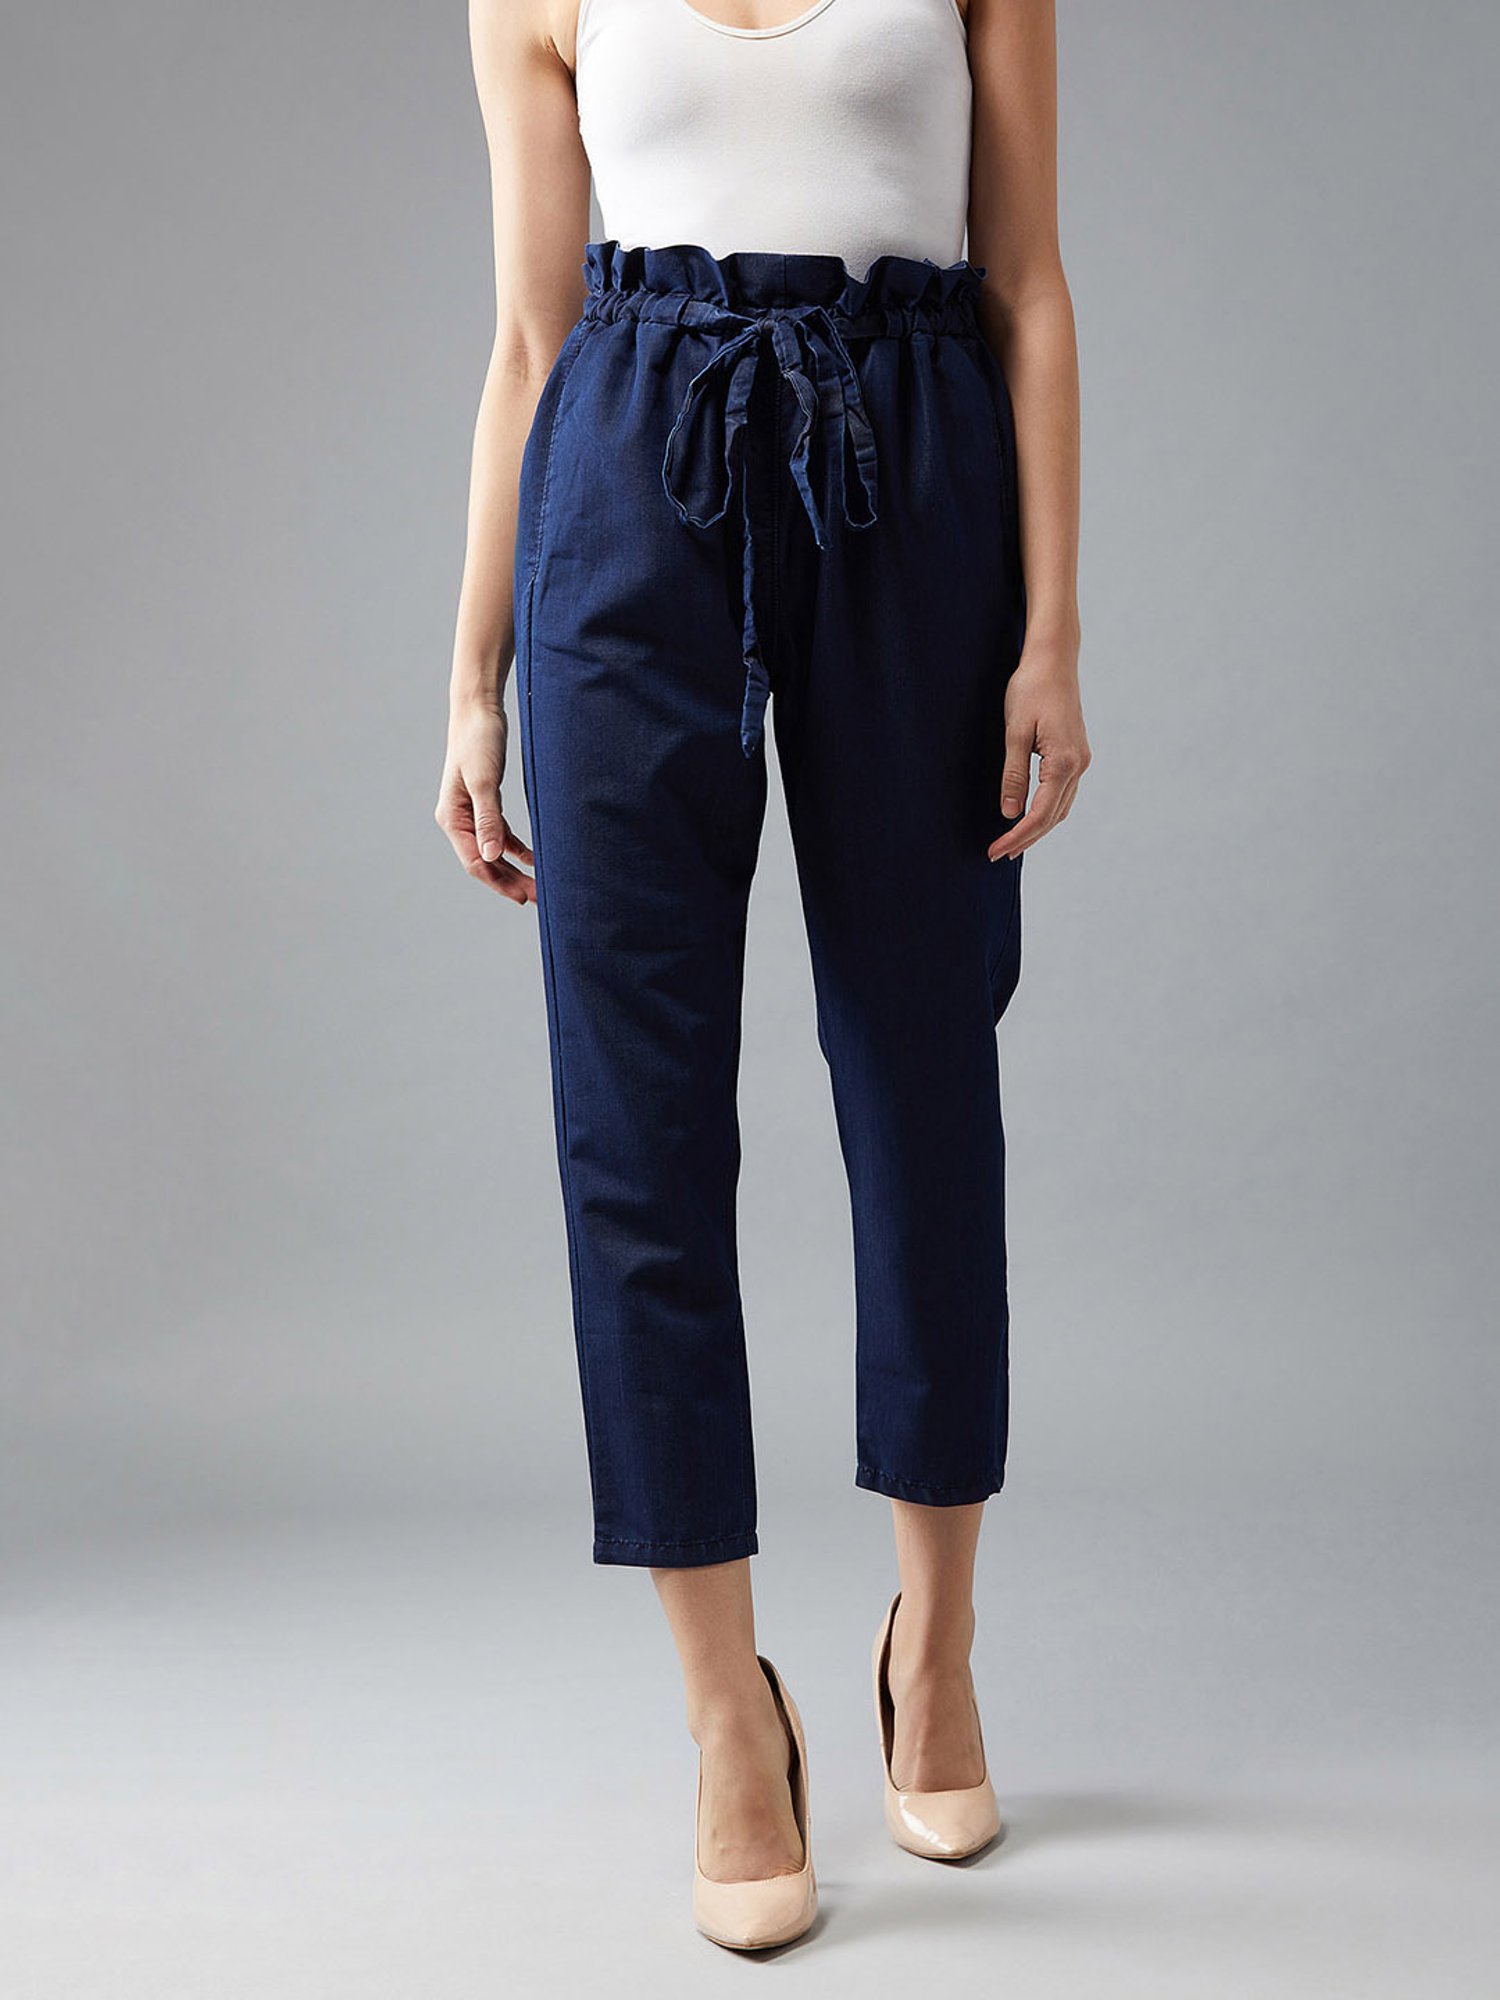 Boden | Pants & Jumpsuits | Boden T287 Paperbag Trousers Linen Navy Blue |  Poshmark